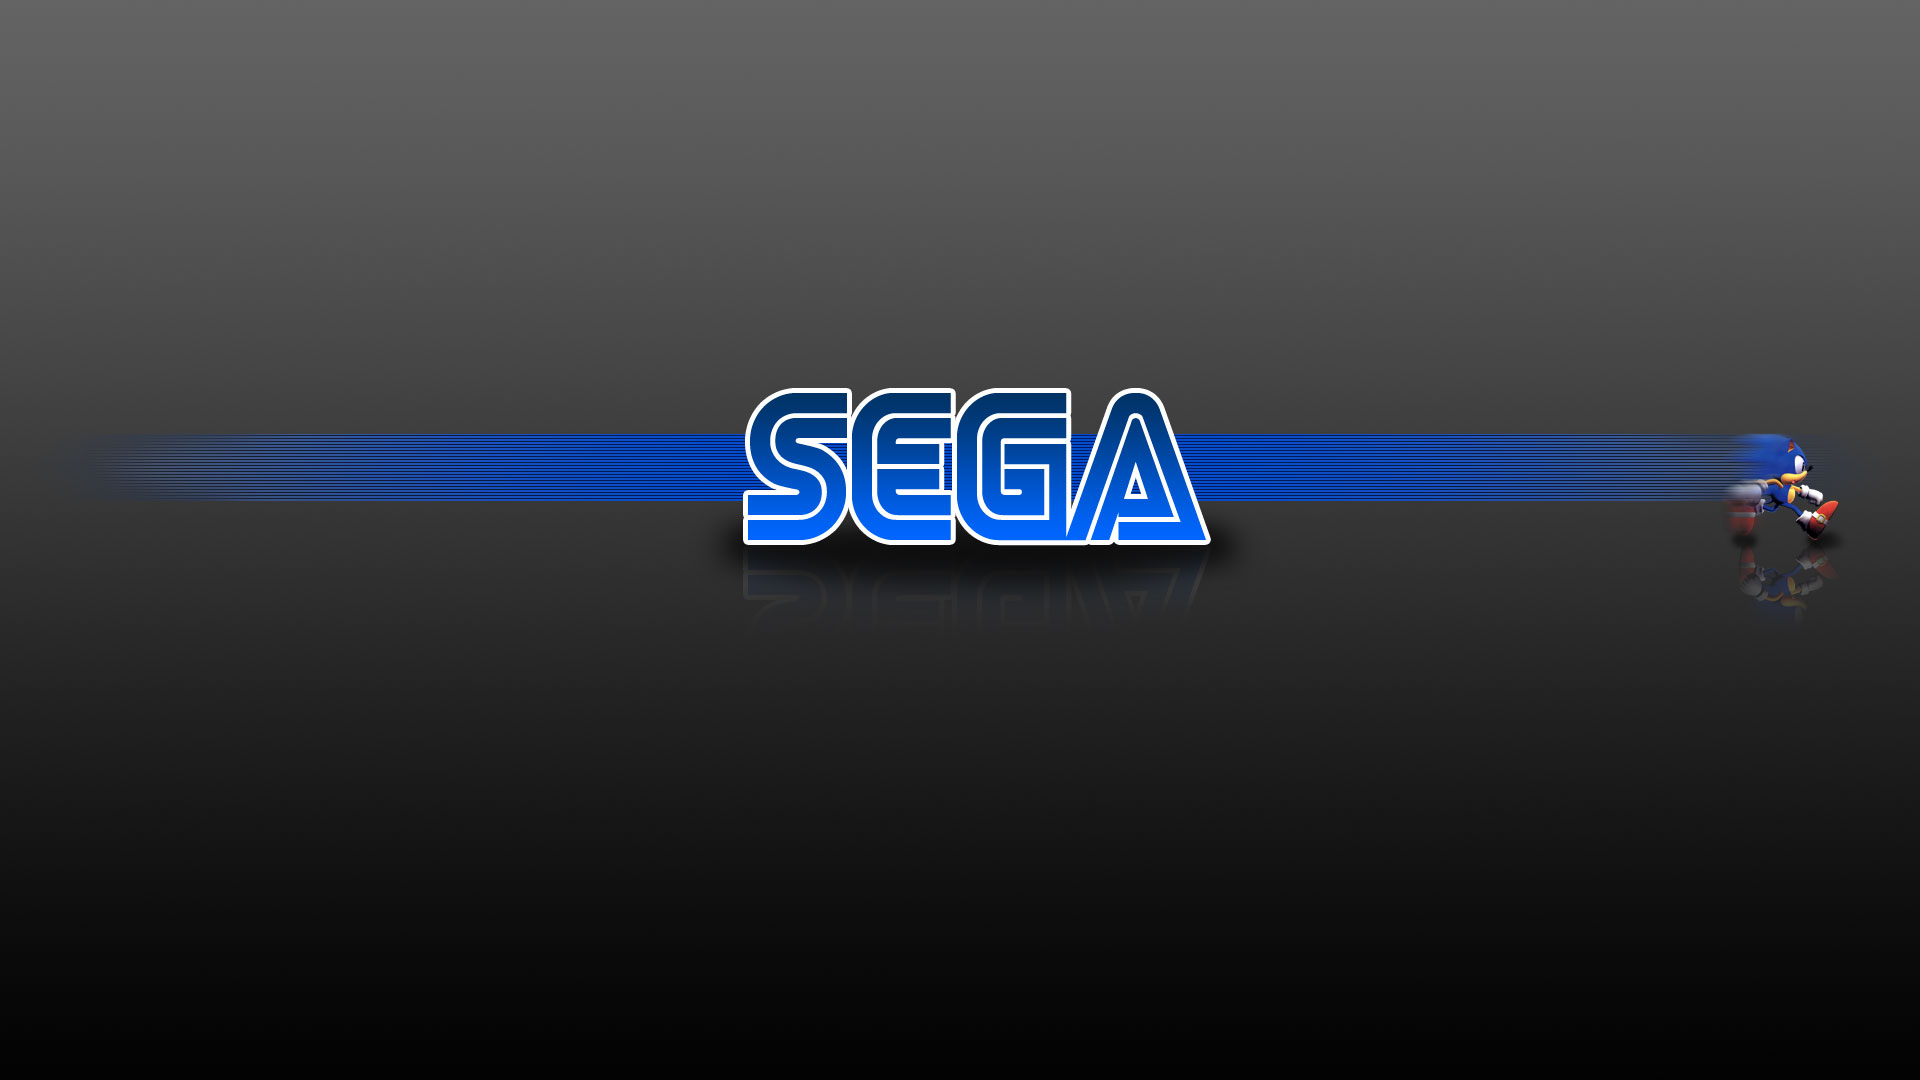 Sega Wallpaper Image Pictures Becuo